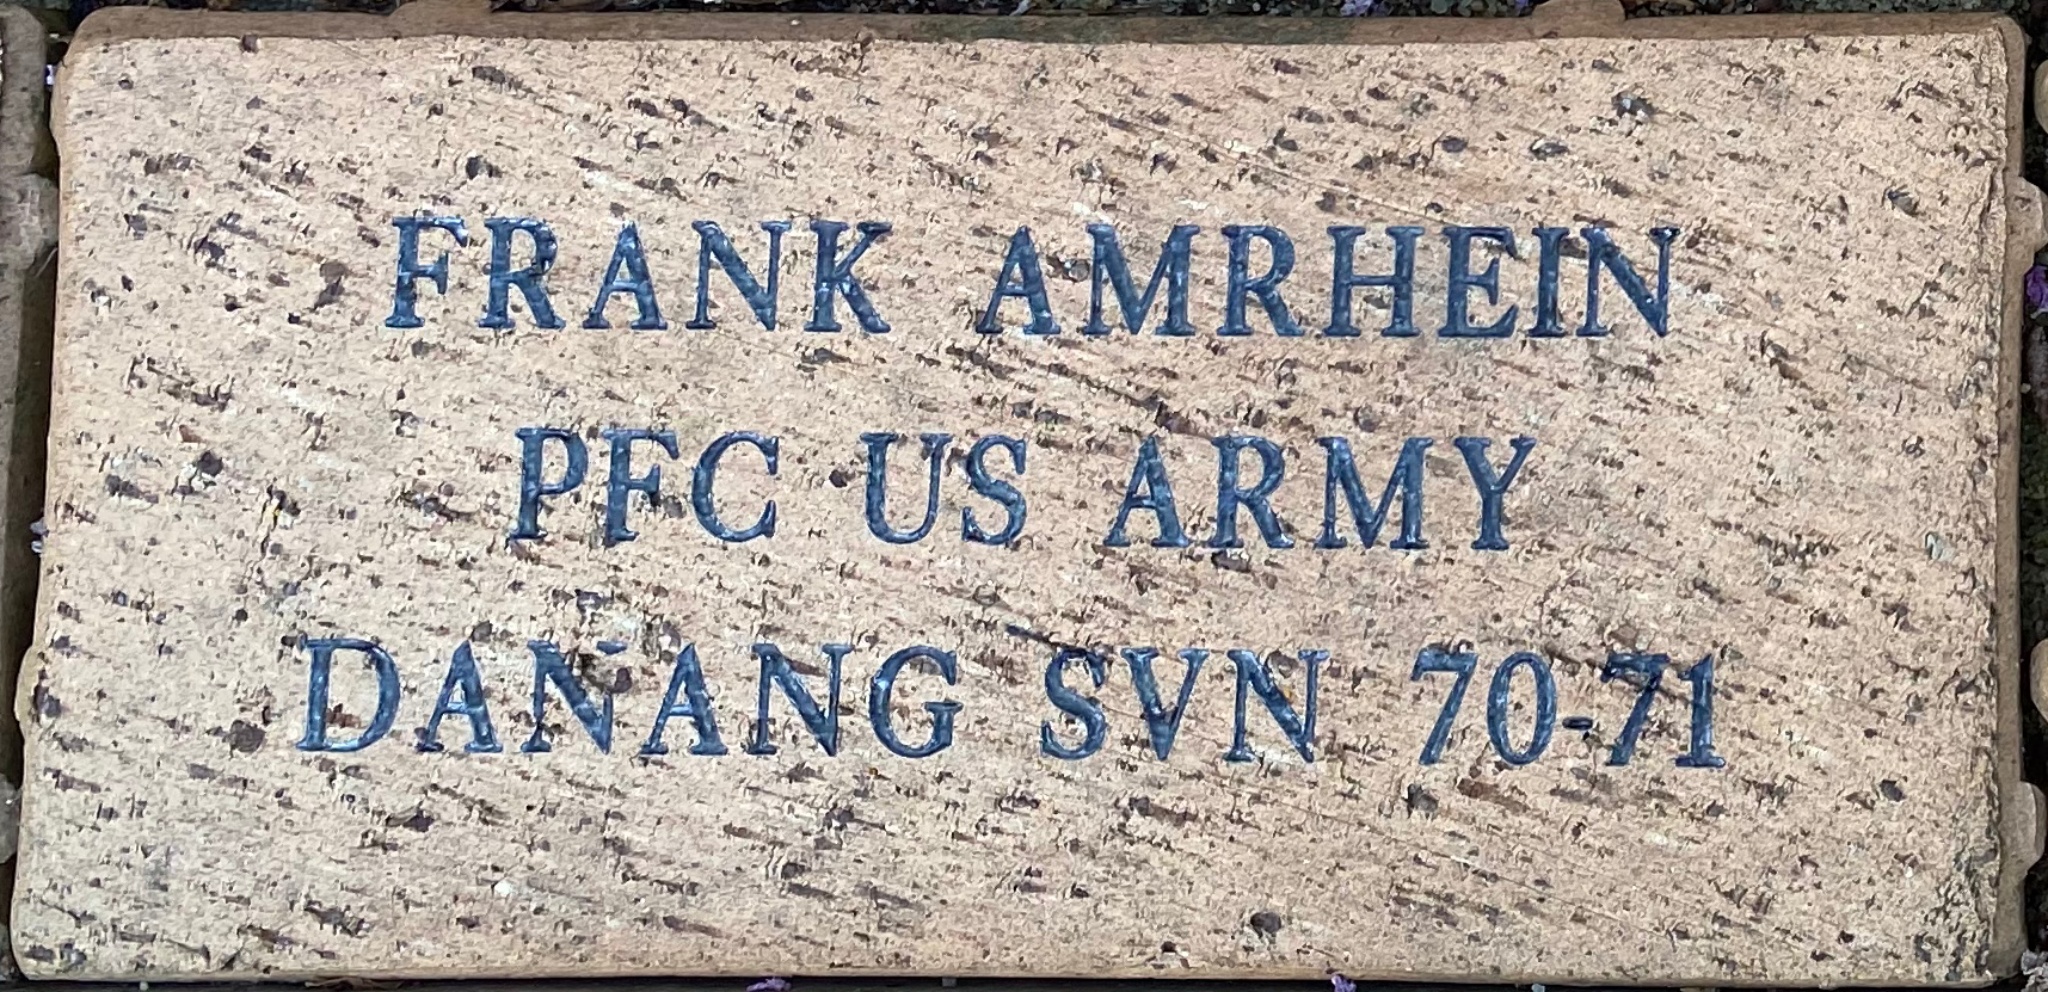 FRANK AMRHEIN PFC US ARMY DANANG SVN 70-71